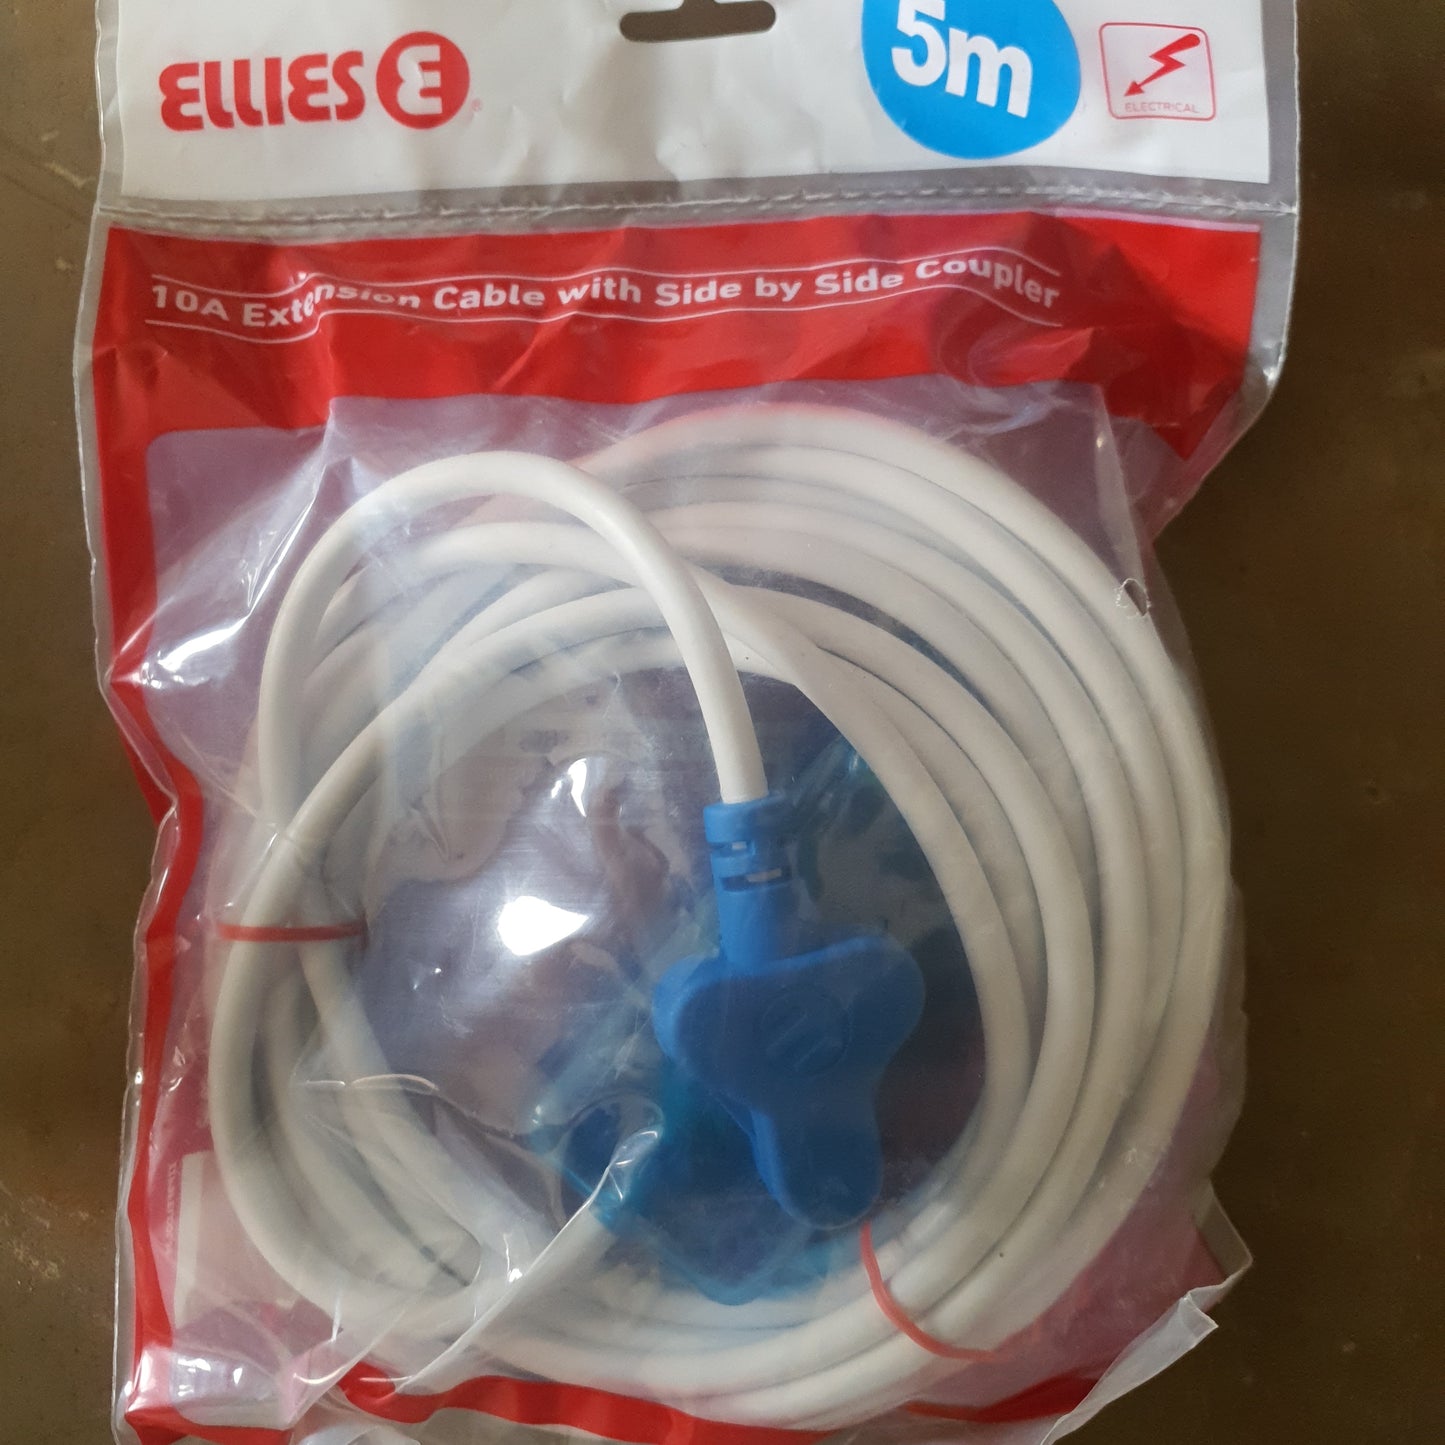 Ellies 5m extension cord